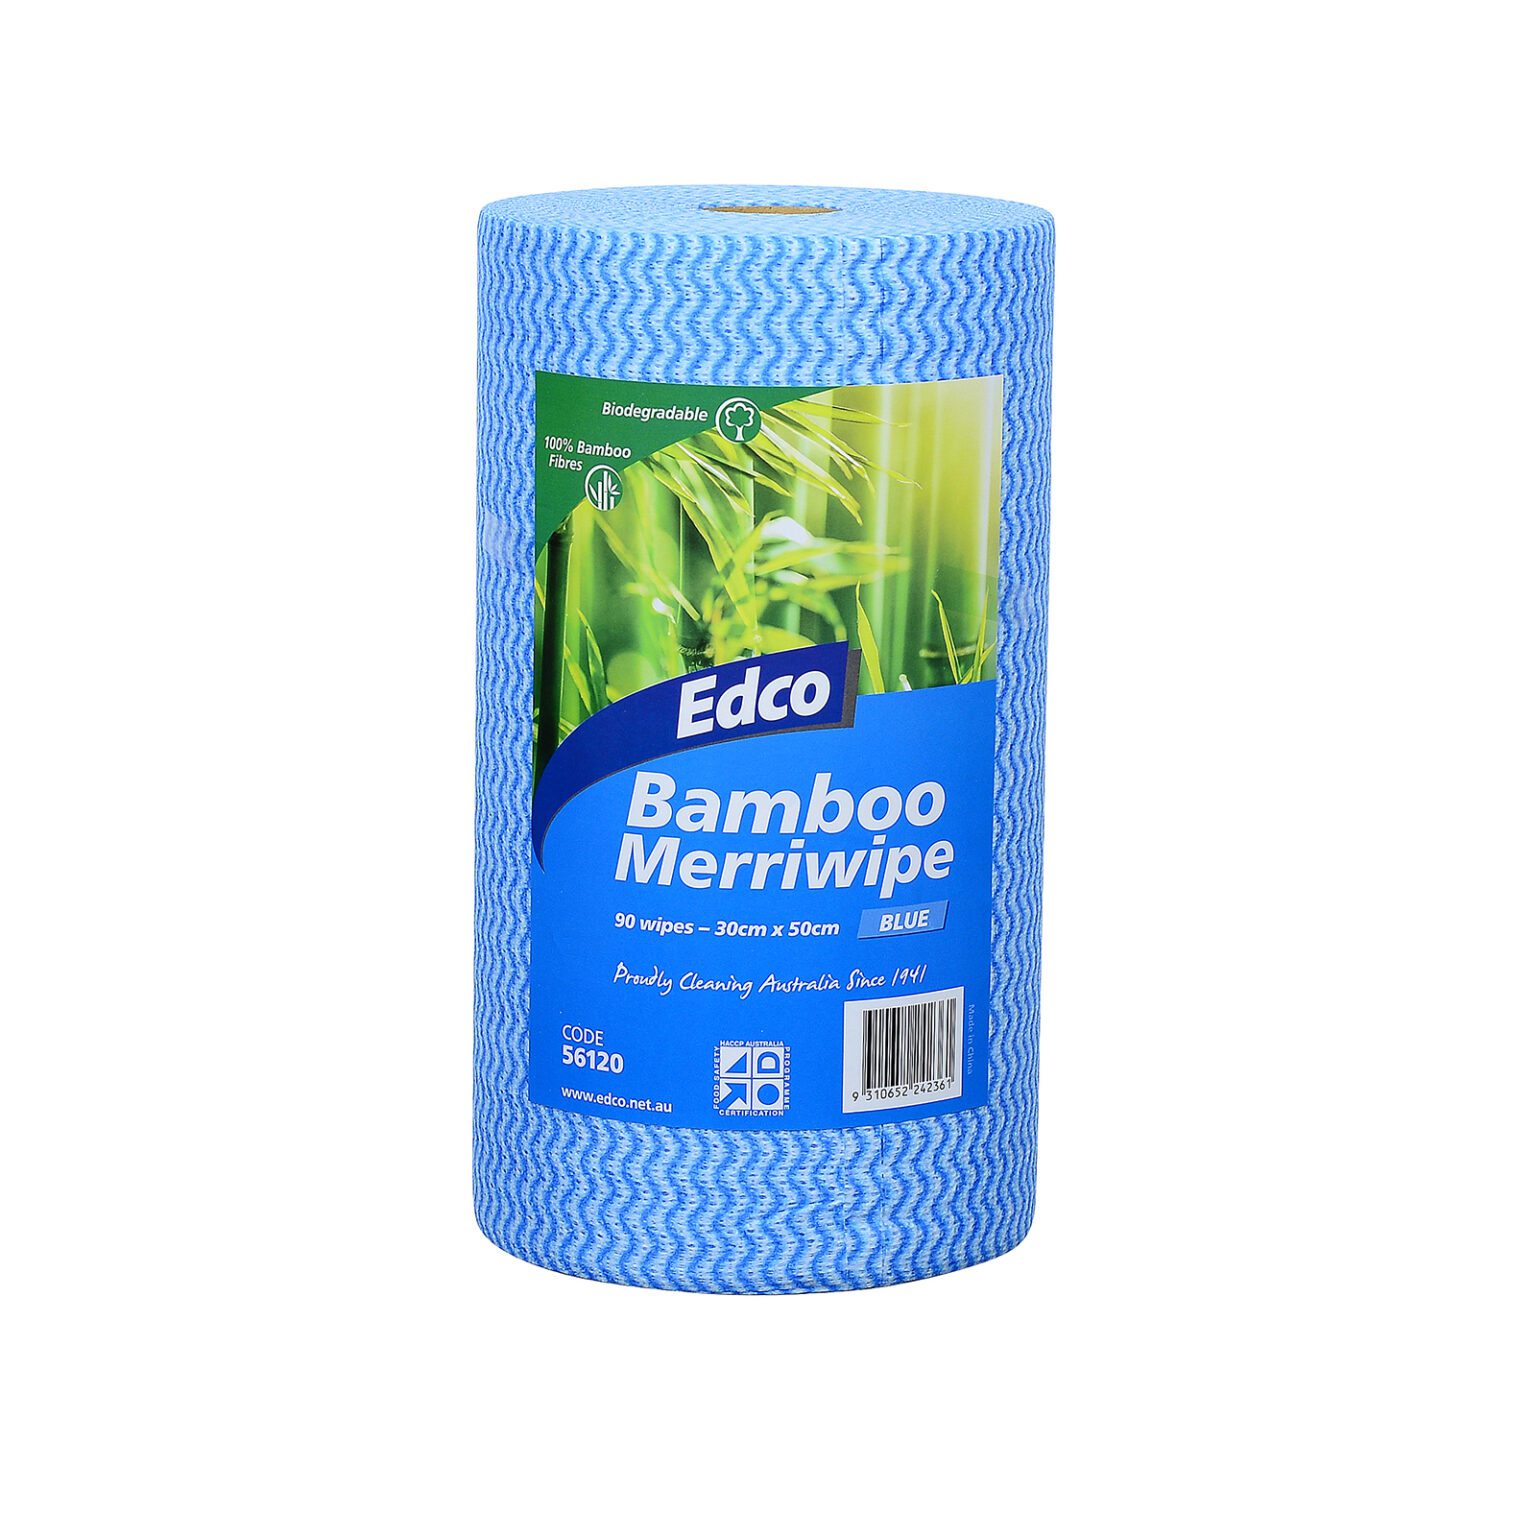 56120-Edco-Bamboo-Merriwipe-Blue-IP